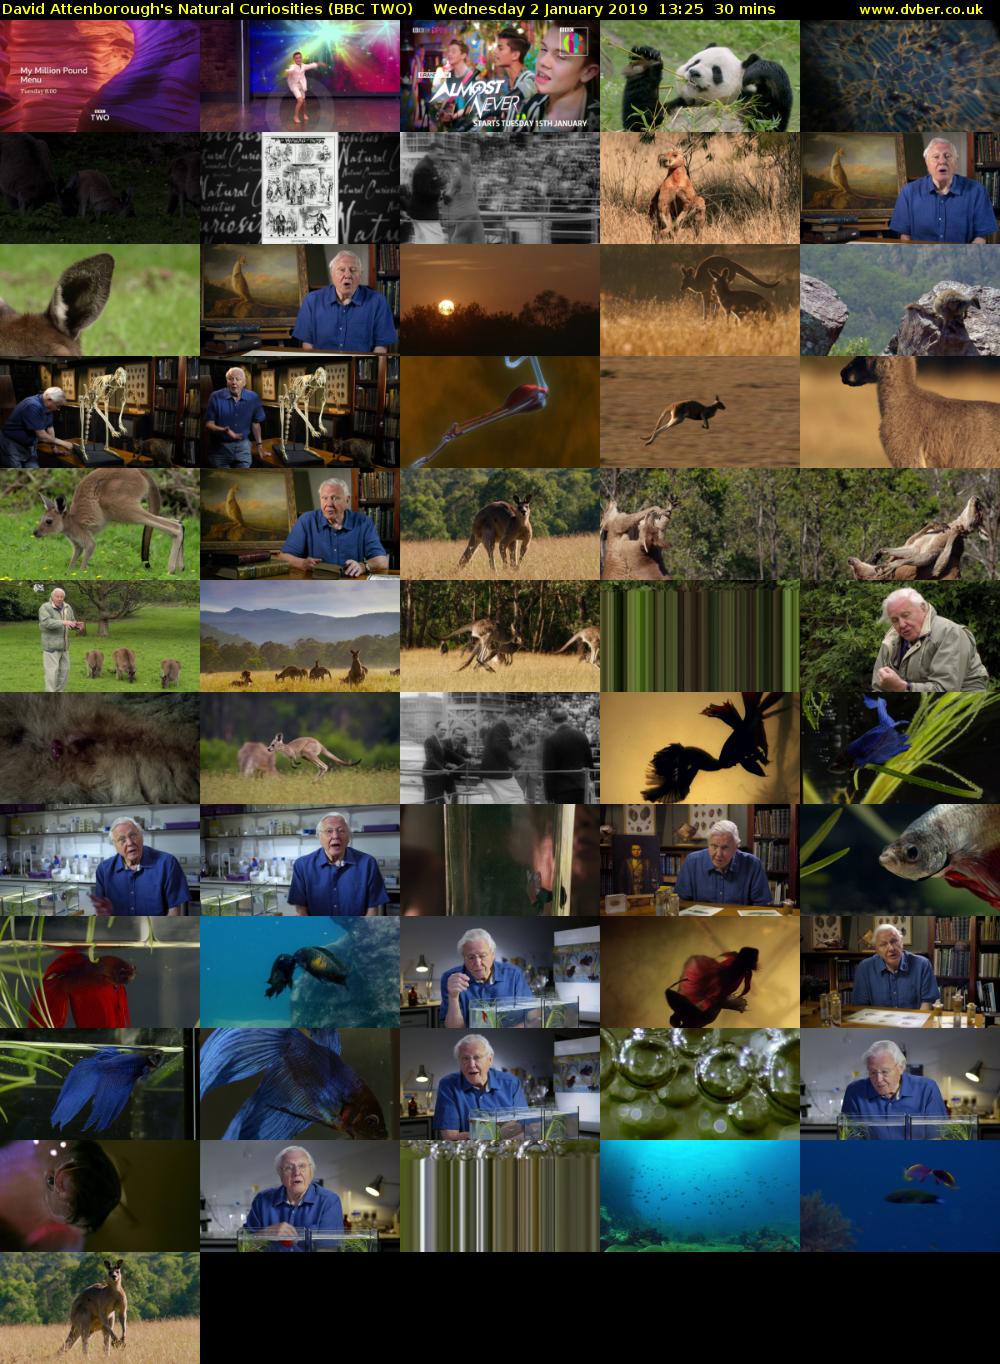 David Attenborough's Natural Curiosities (BBC TWO) Wednesday 2 January 2019 13:25 - 13:55